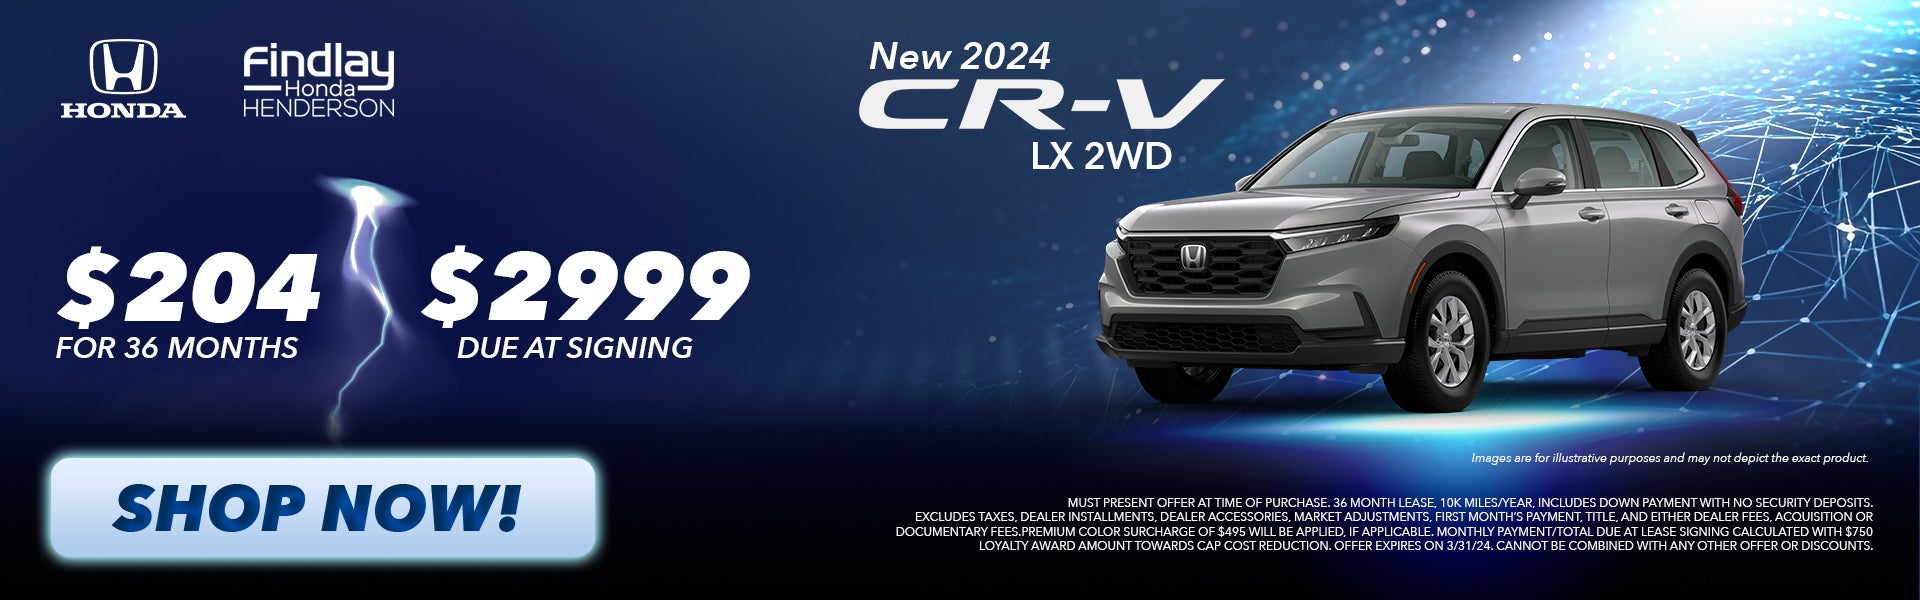 2024 CR-V LX